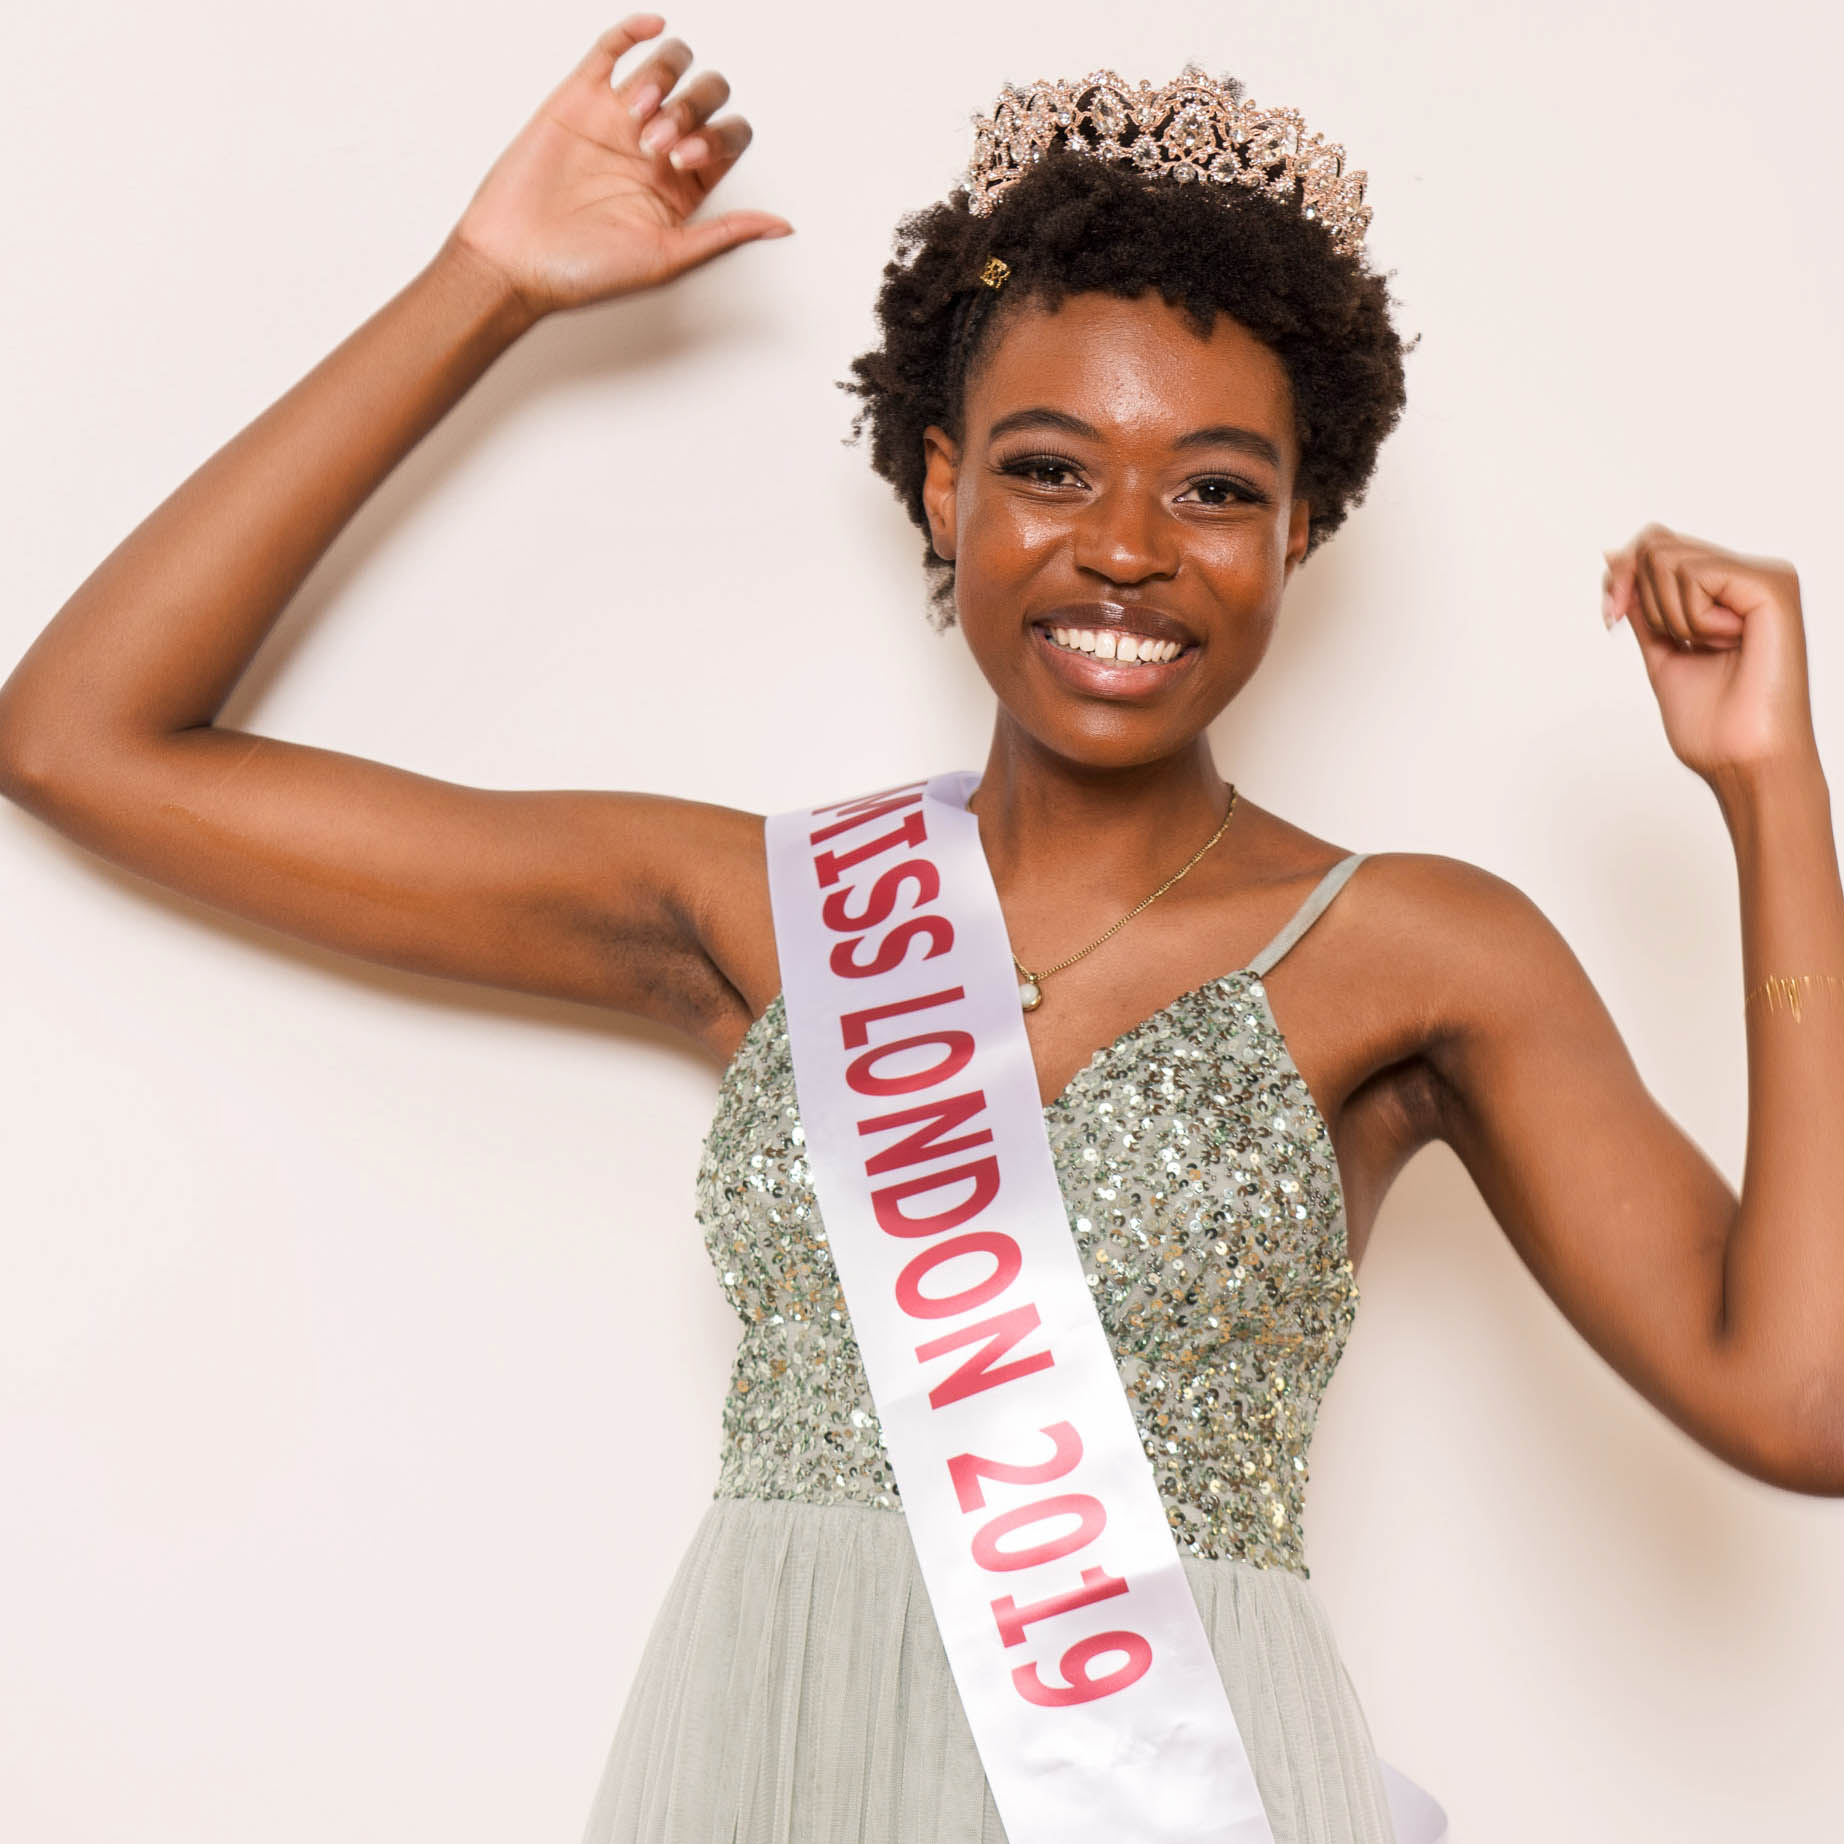 Miss London 2019 - Dominica News Online.